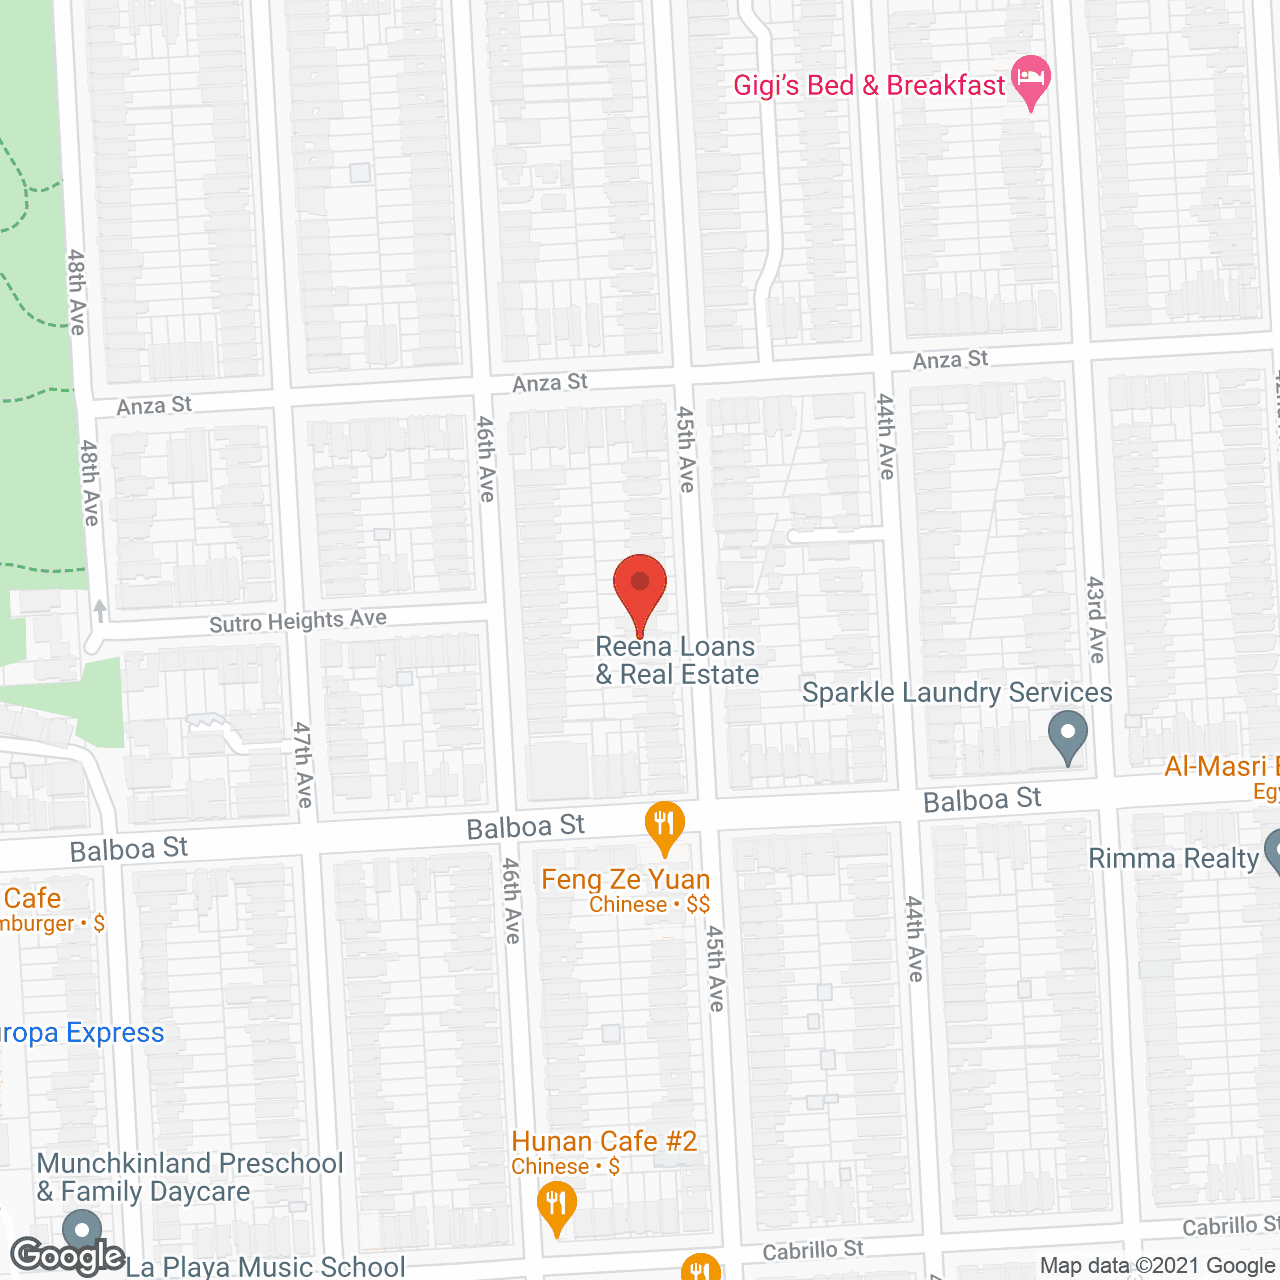 Sutro Heights in google map